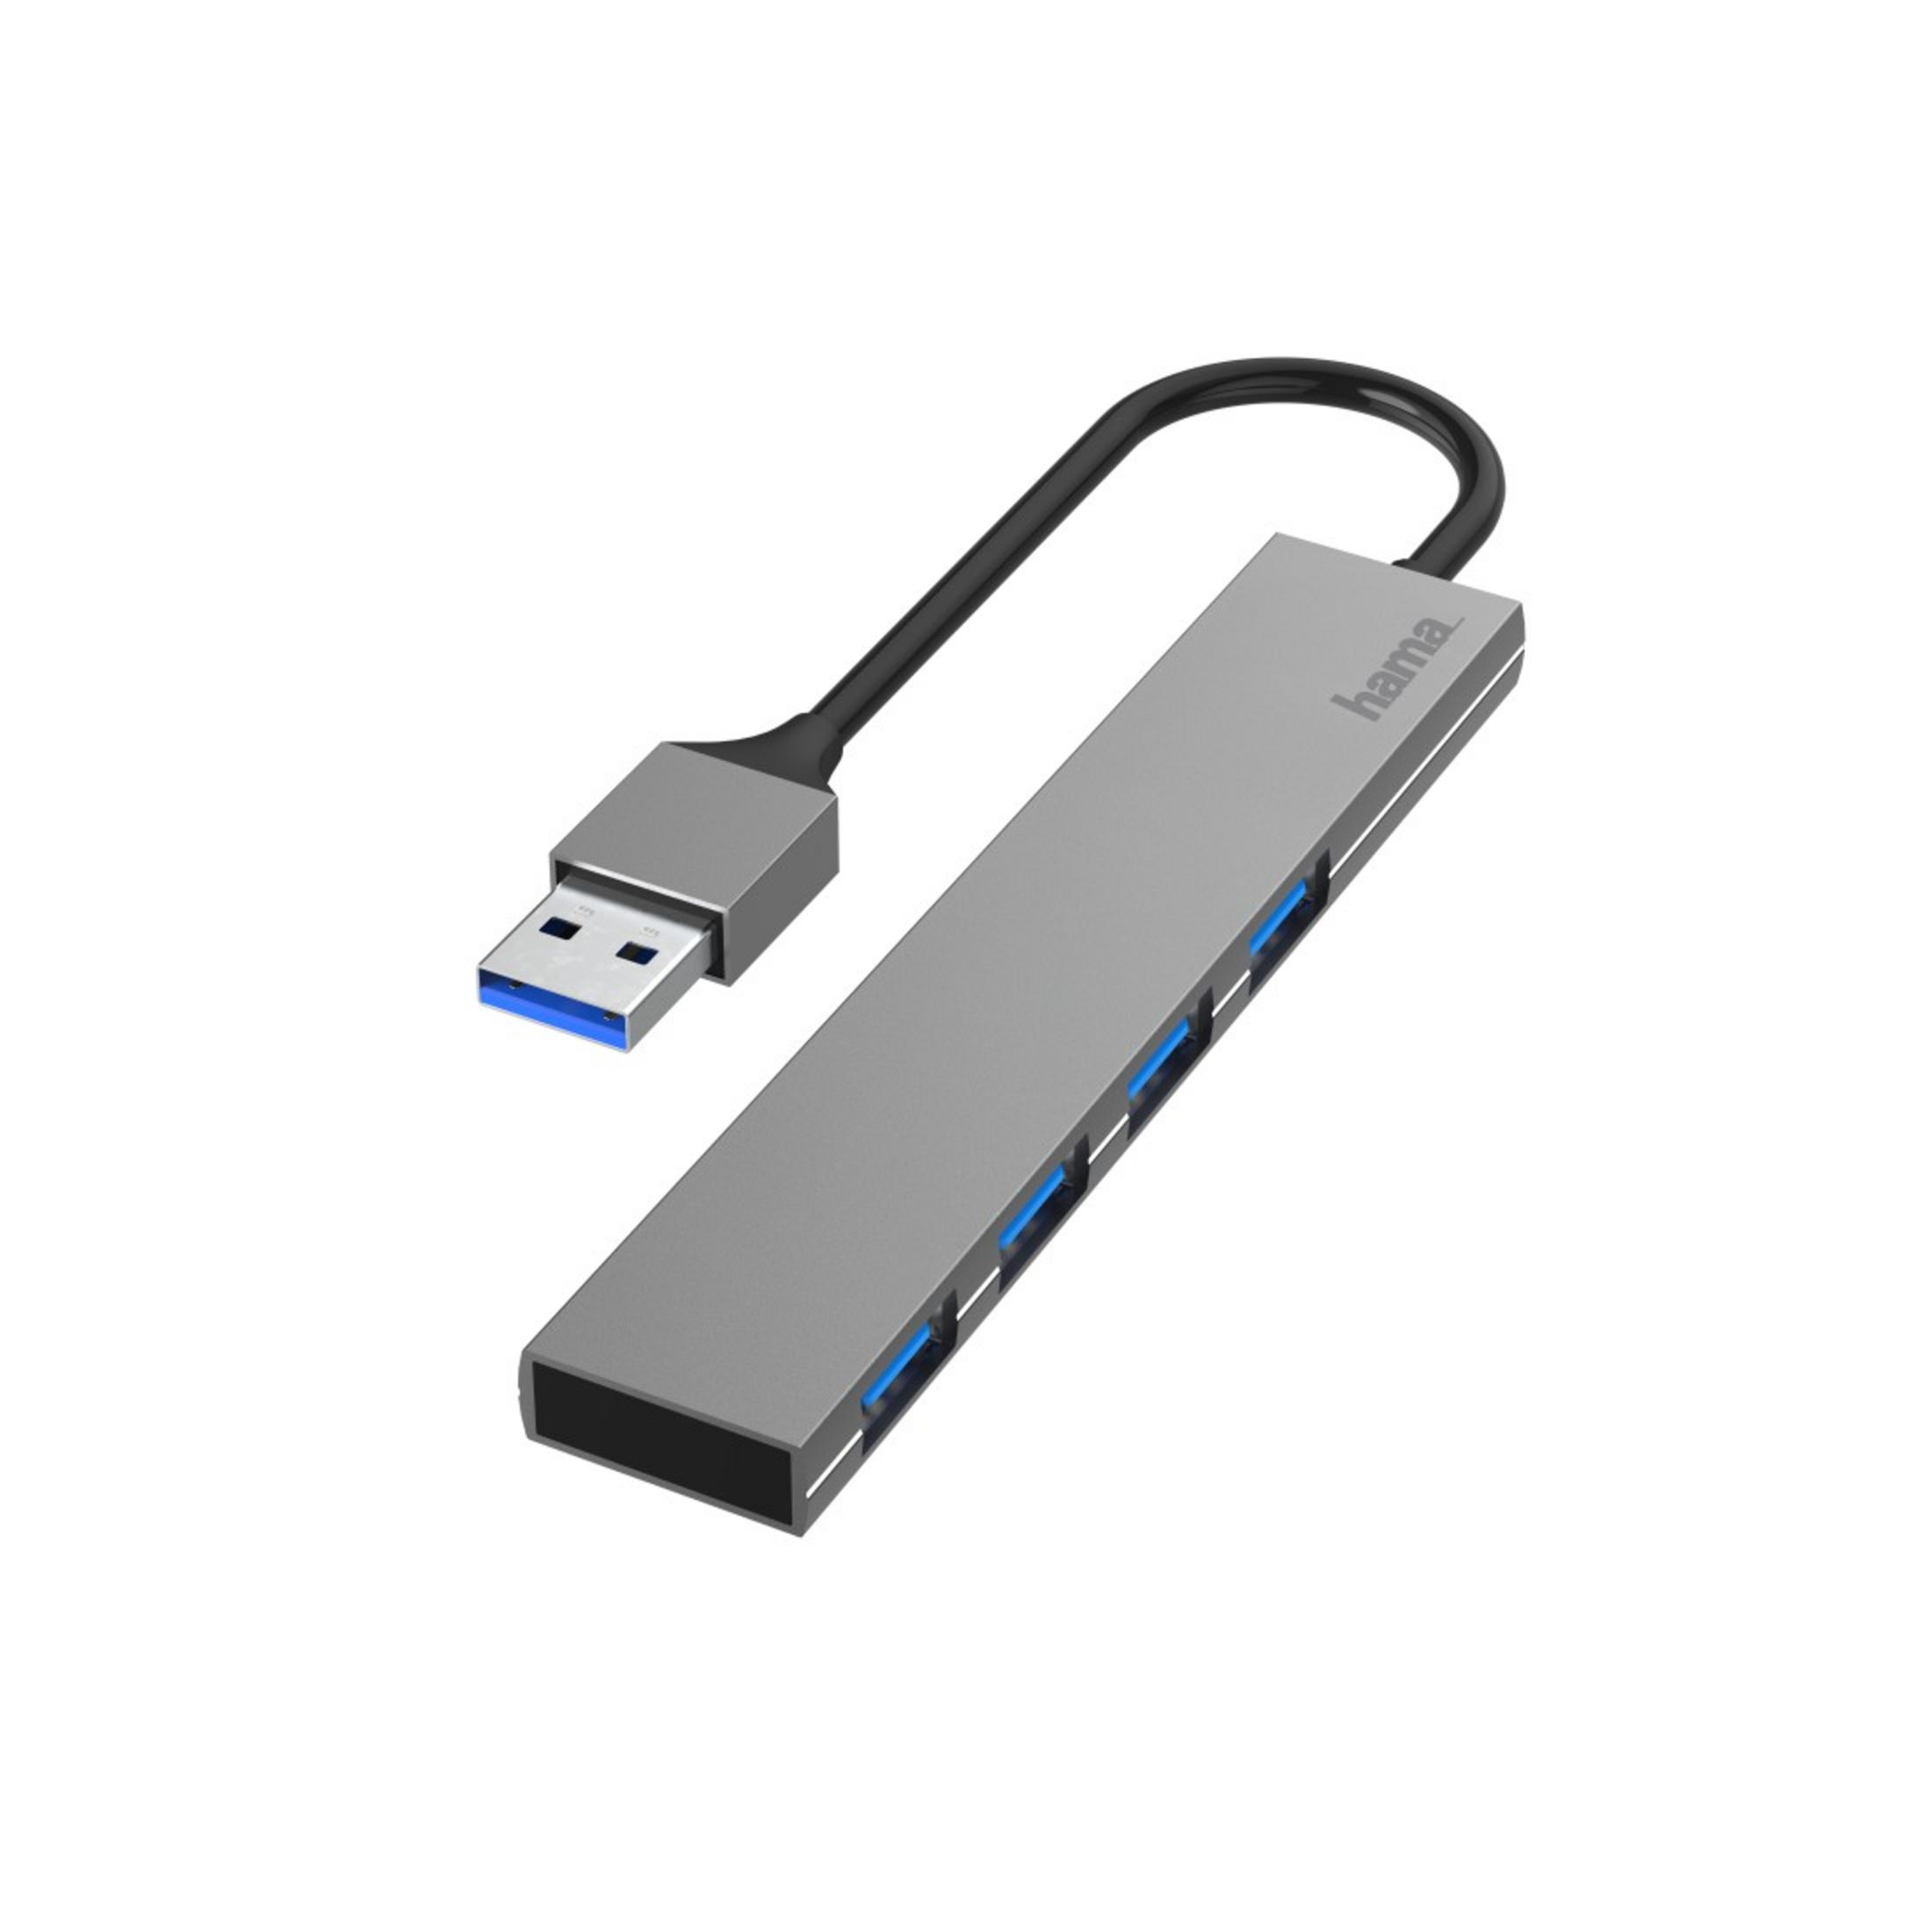 PORTS, HAMA USB USB-A-HUB, 200114 Anthrazit 5 Hub, 4 GBIT/S,